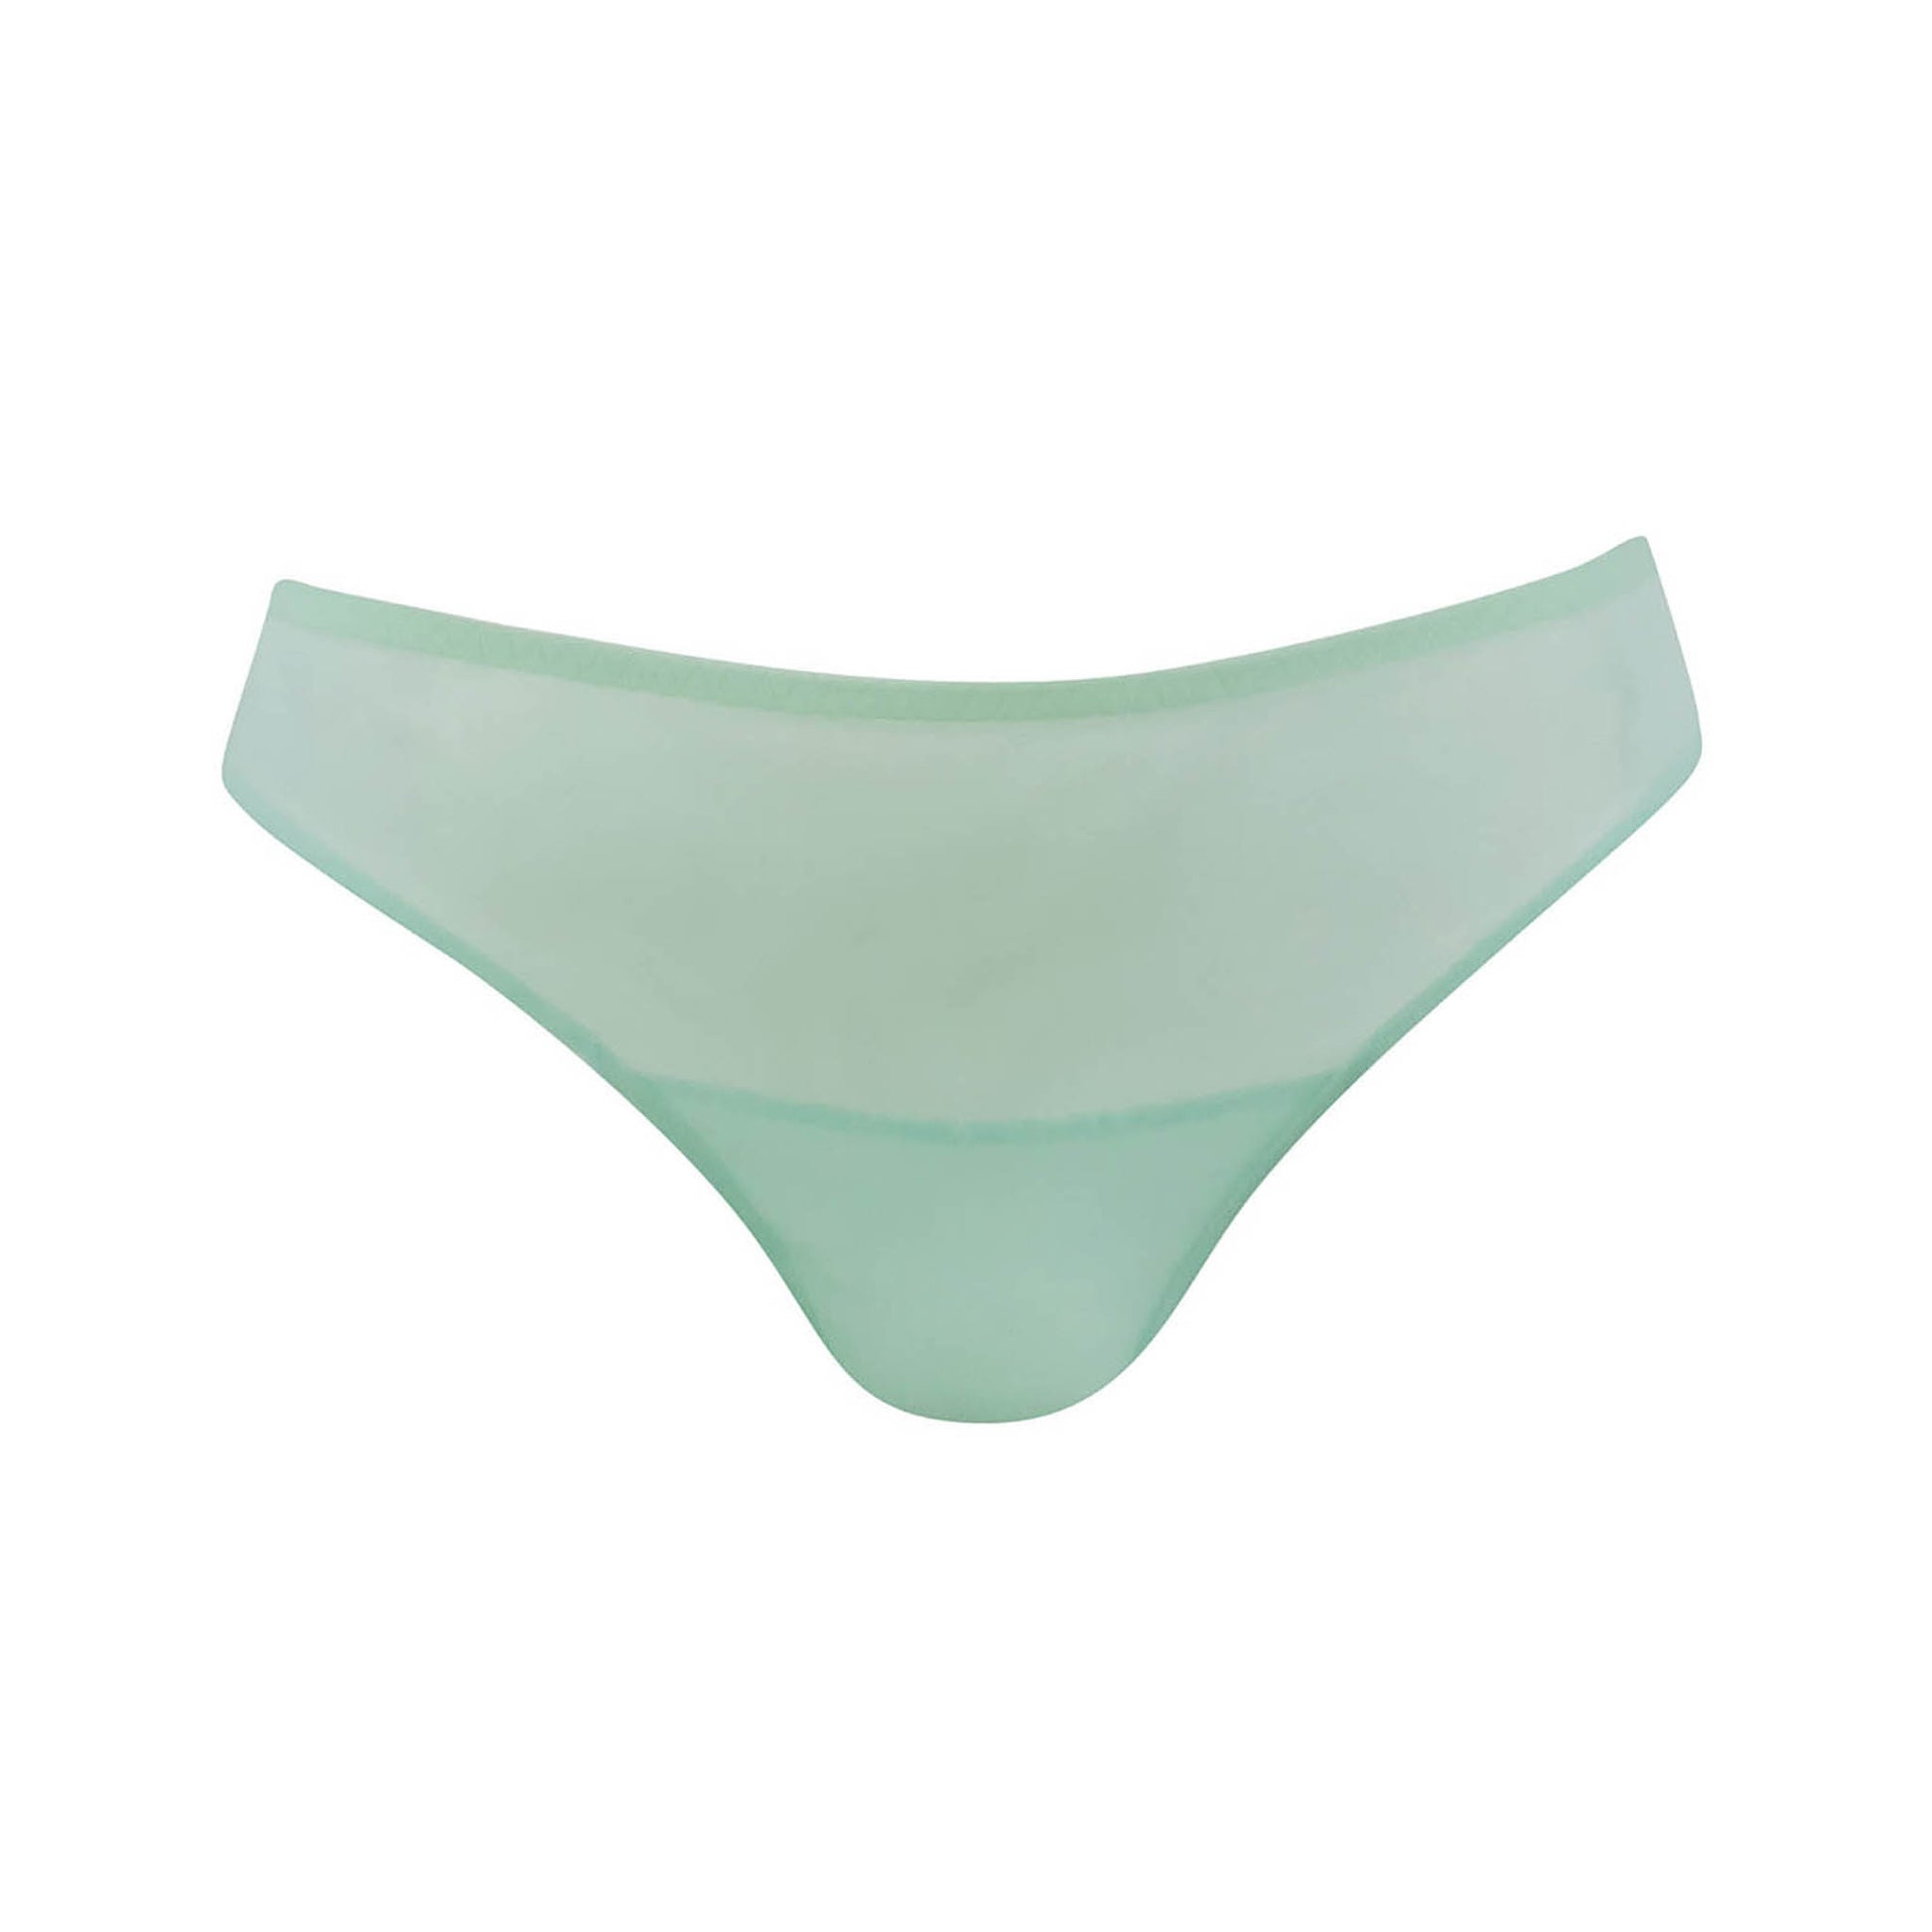 The I.D.Line green mint mesh bikini.